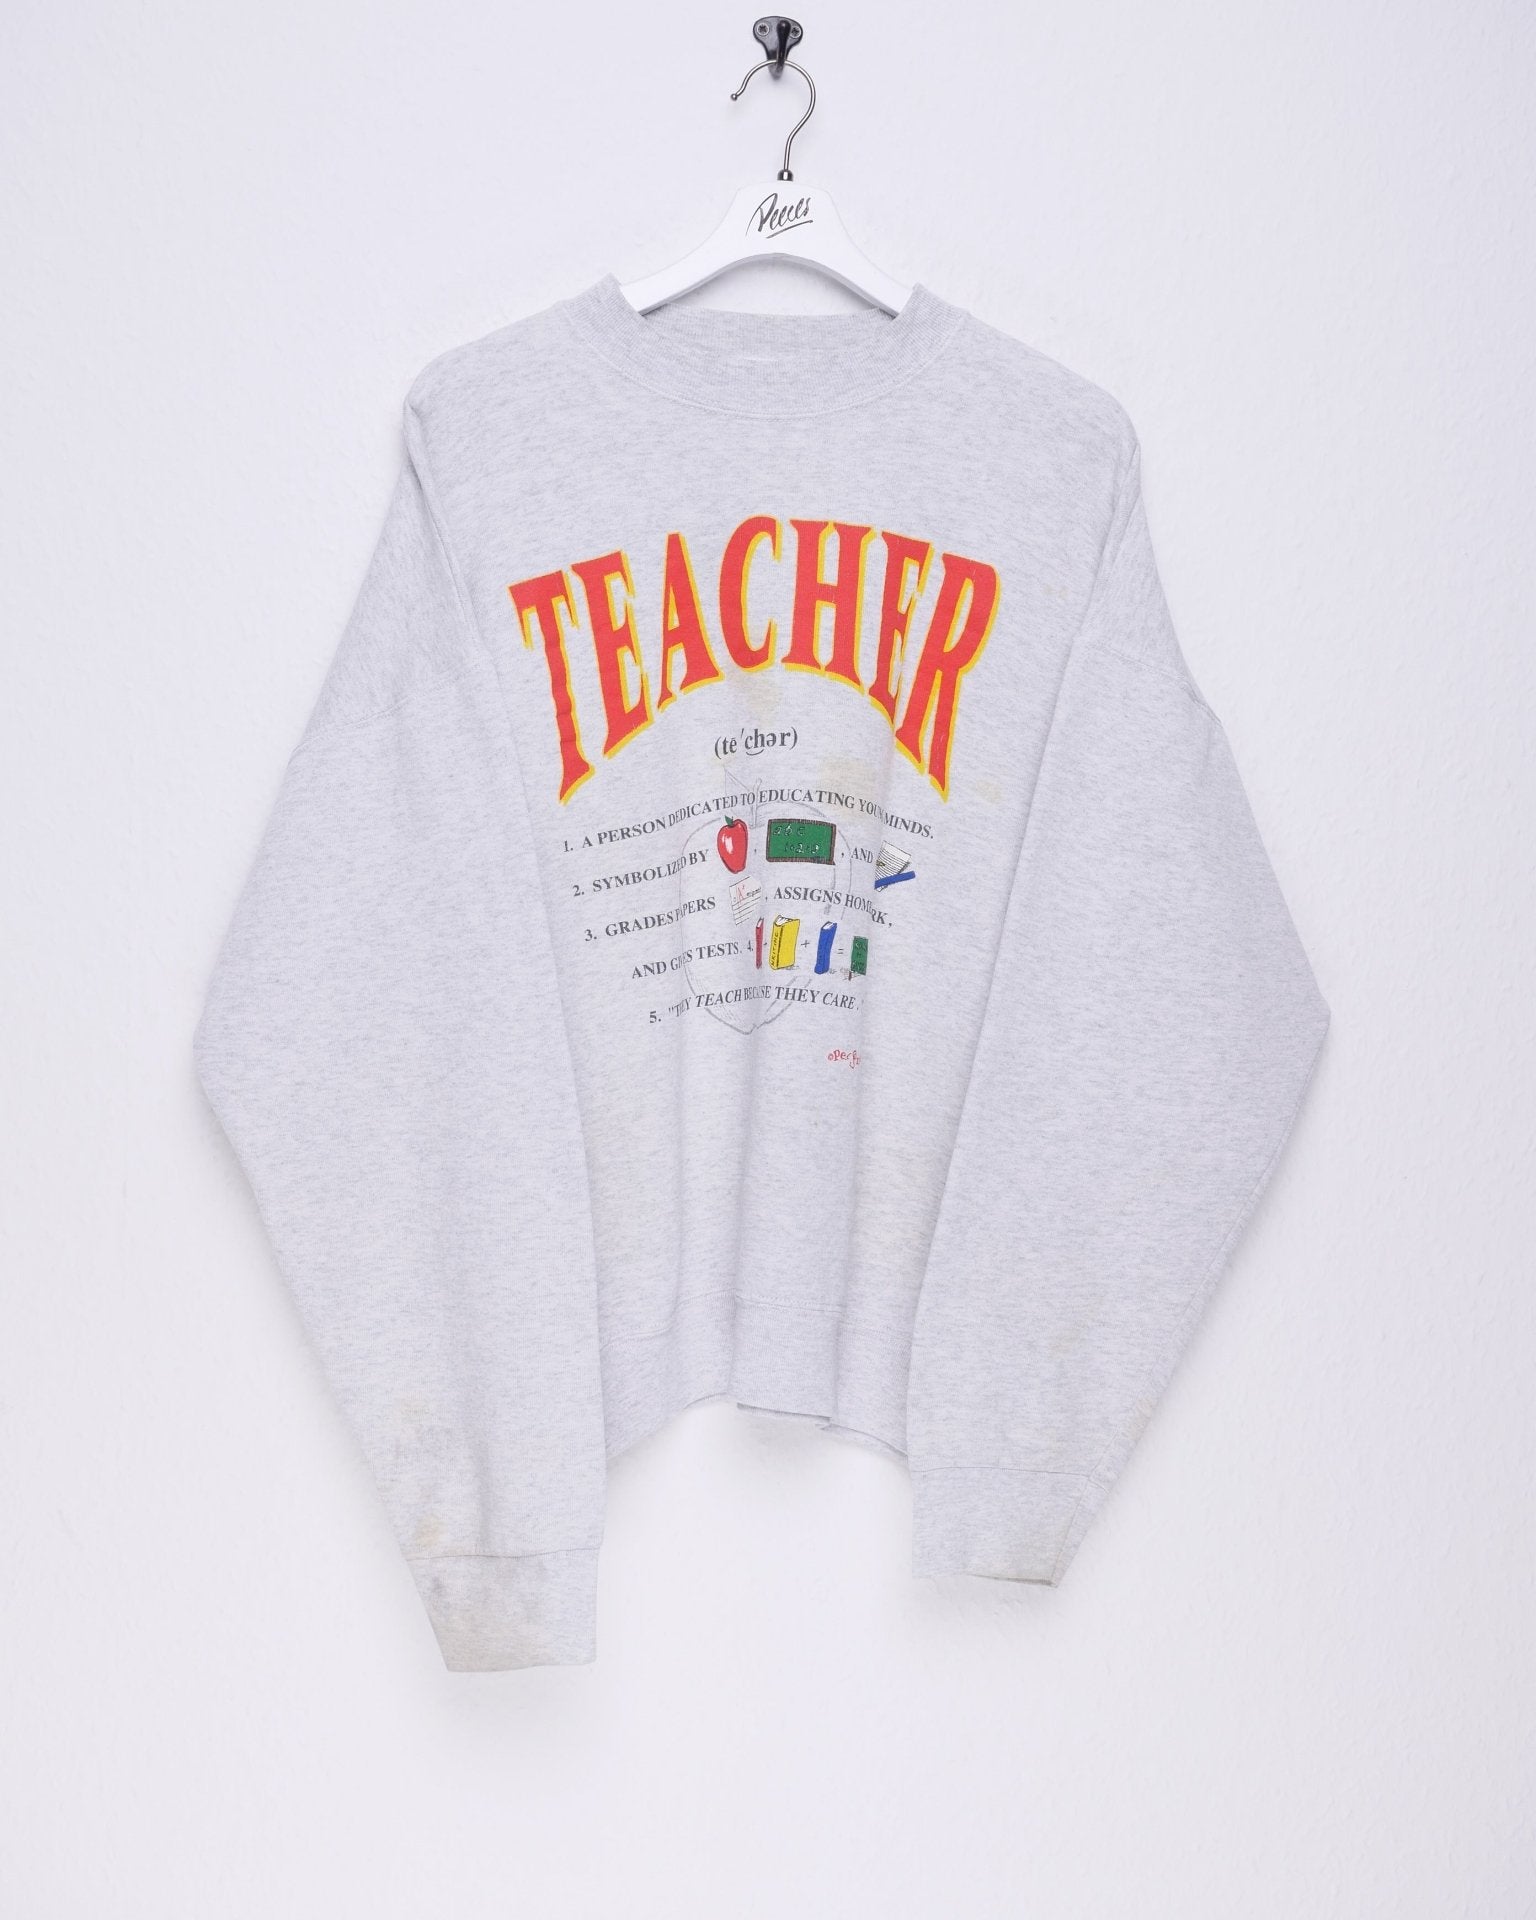 Teacher printed Graphic Vintage Sweater - Peeces